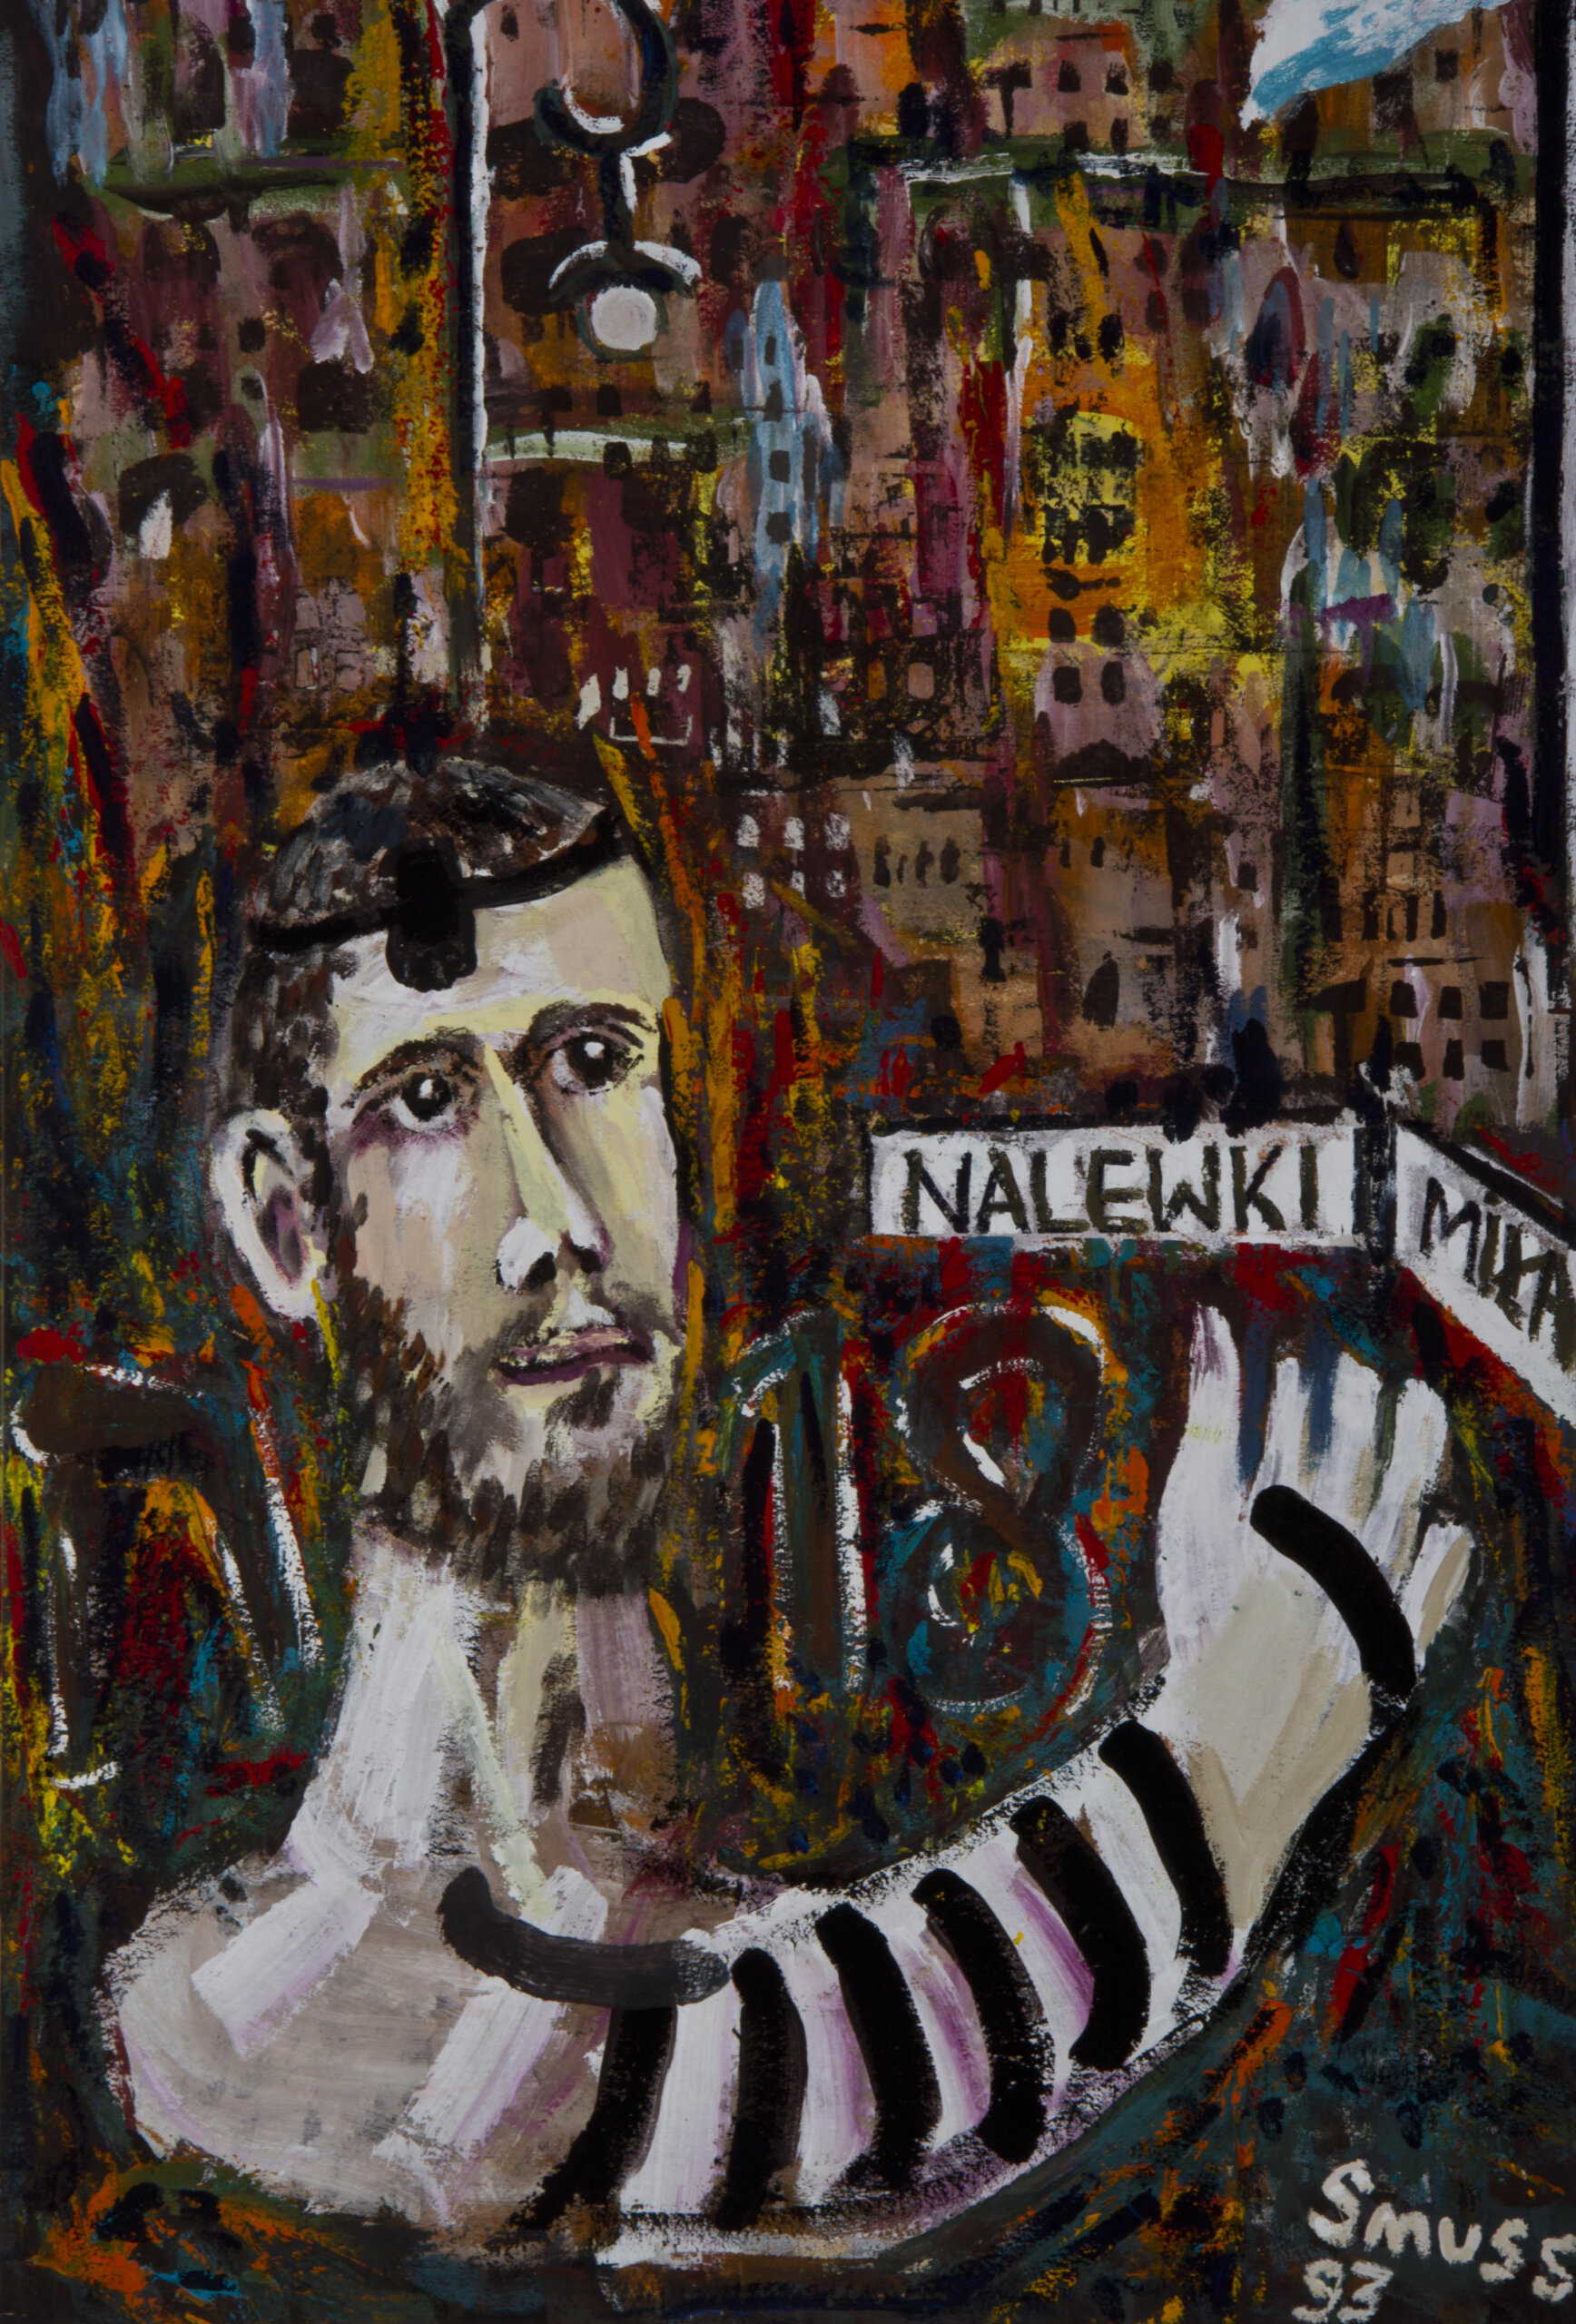 Art by Michael Smuss, holocaust survivor, warsaw ghetto